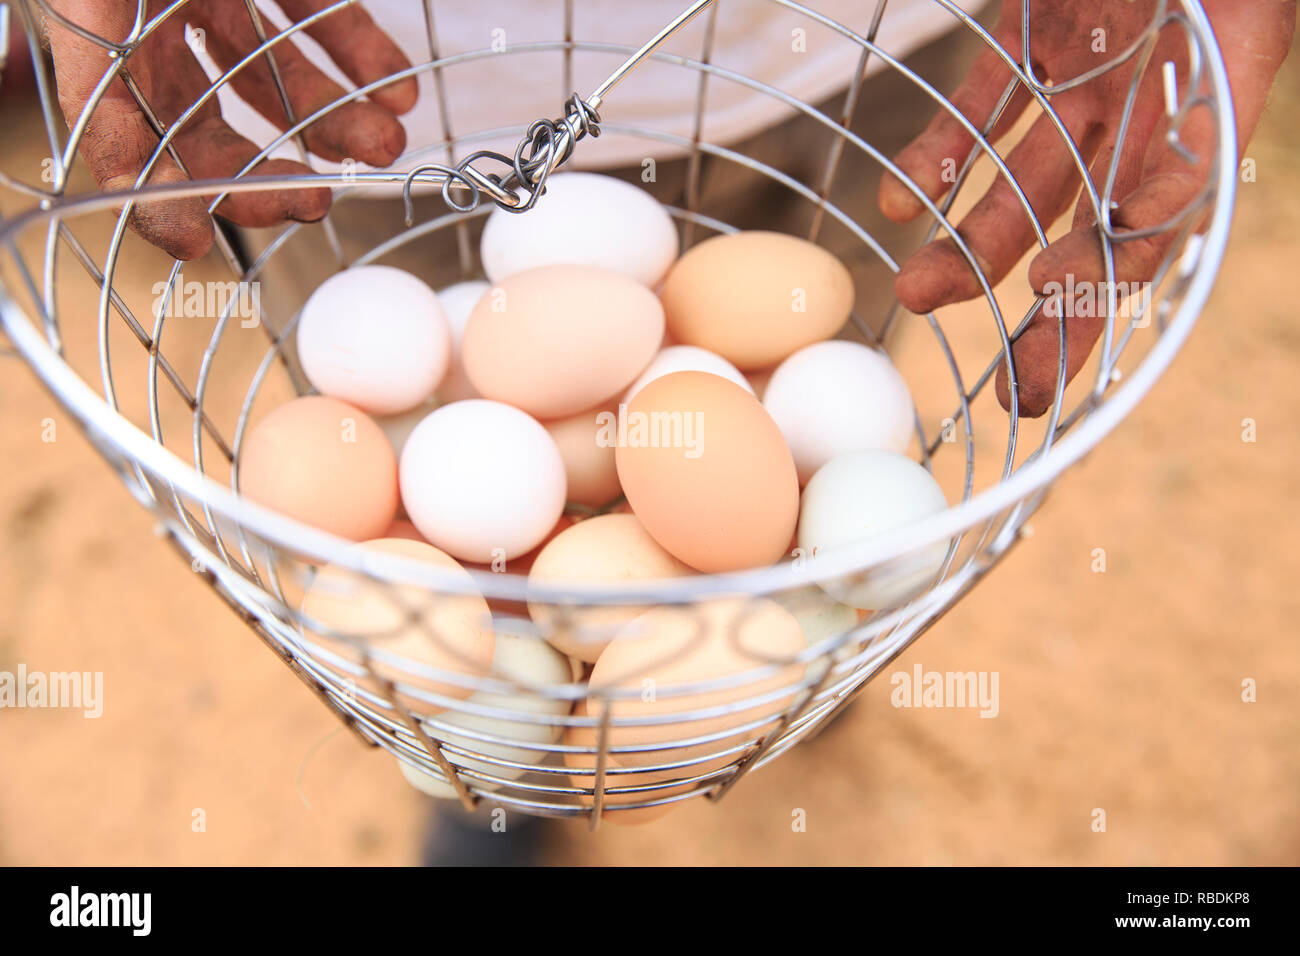 A farmer holds a basket of organic eggs Stock Photo